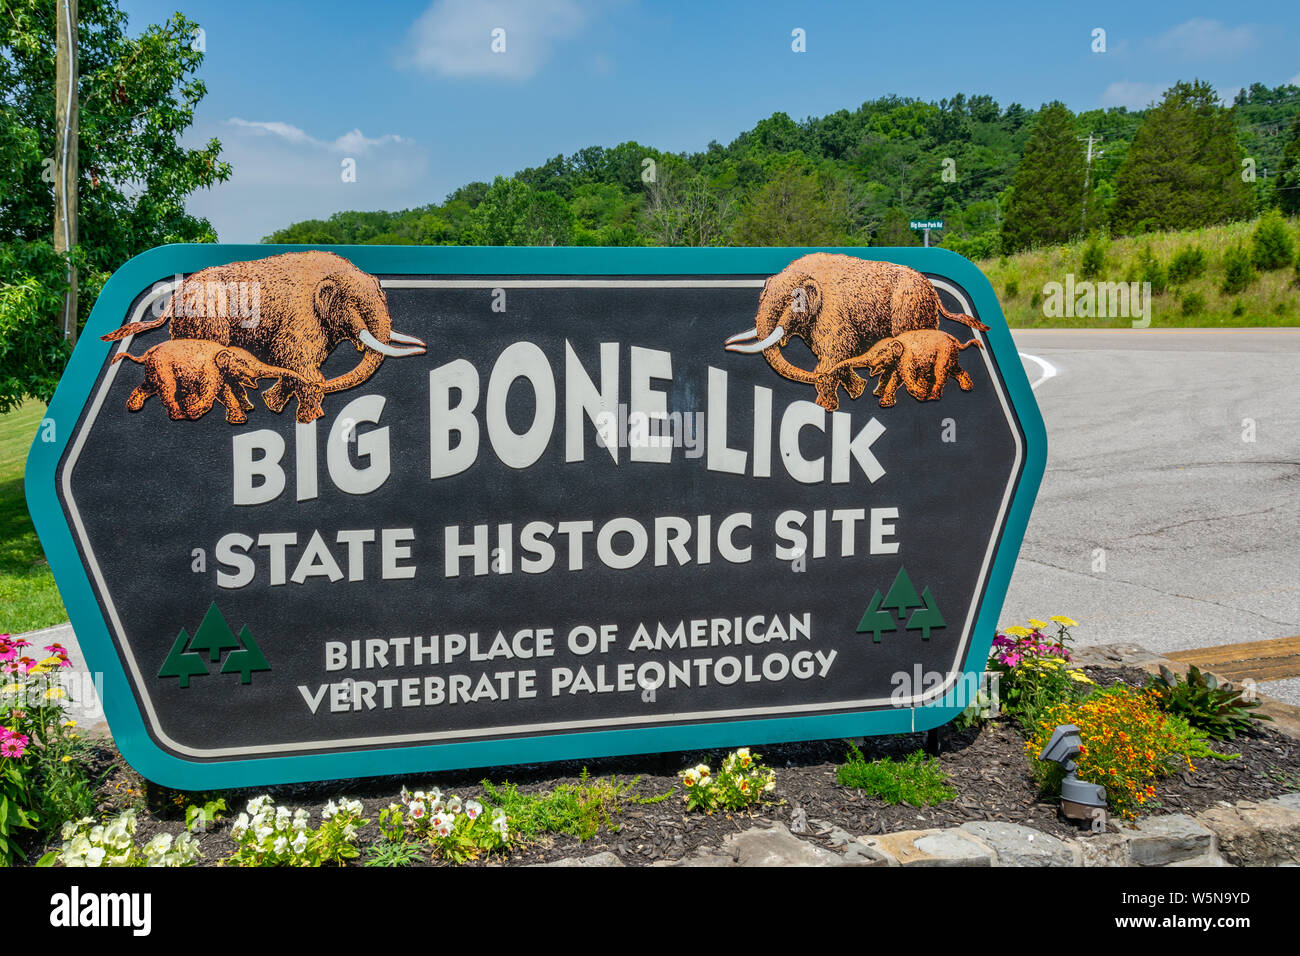 bone lick park new york